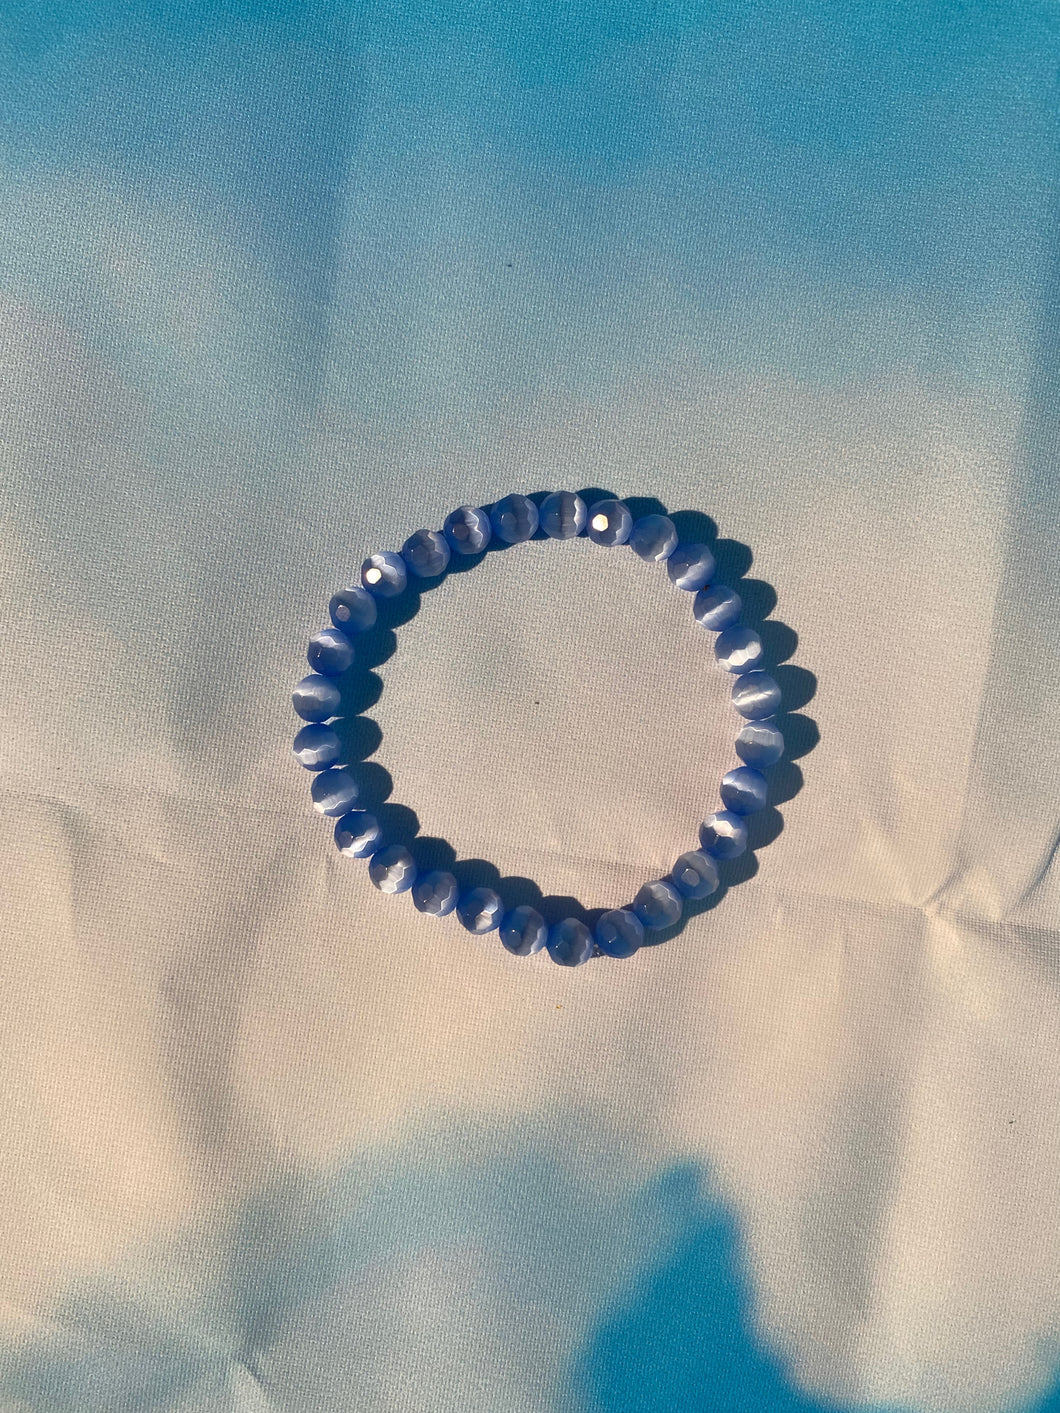 Blue Crystal Ball Bracelet